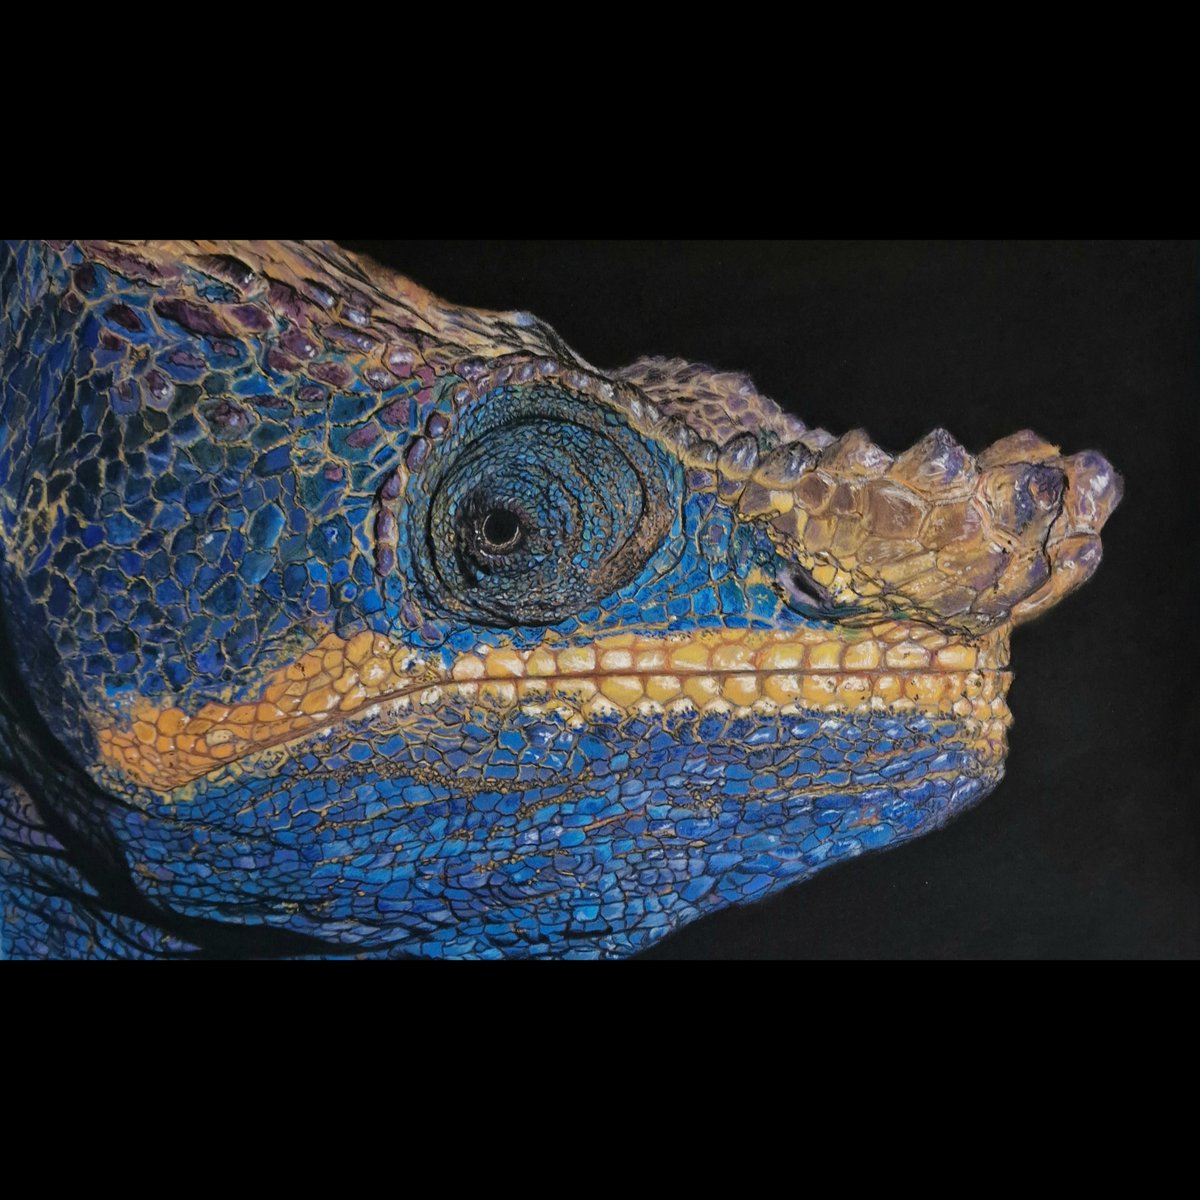 Parson Chameleon from Madagaskar,the like to be blue sometimes...pastels on  pastelmat 50x35cm
#chameleon #pastelartwork #wildlifeartwork #wildlifeartist #animaldrawing #reptiledrawing #reptiles #reptileart #pastelportrait #closeupart #pastelartist #detailedart